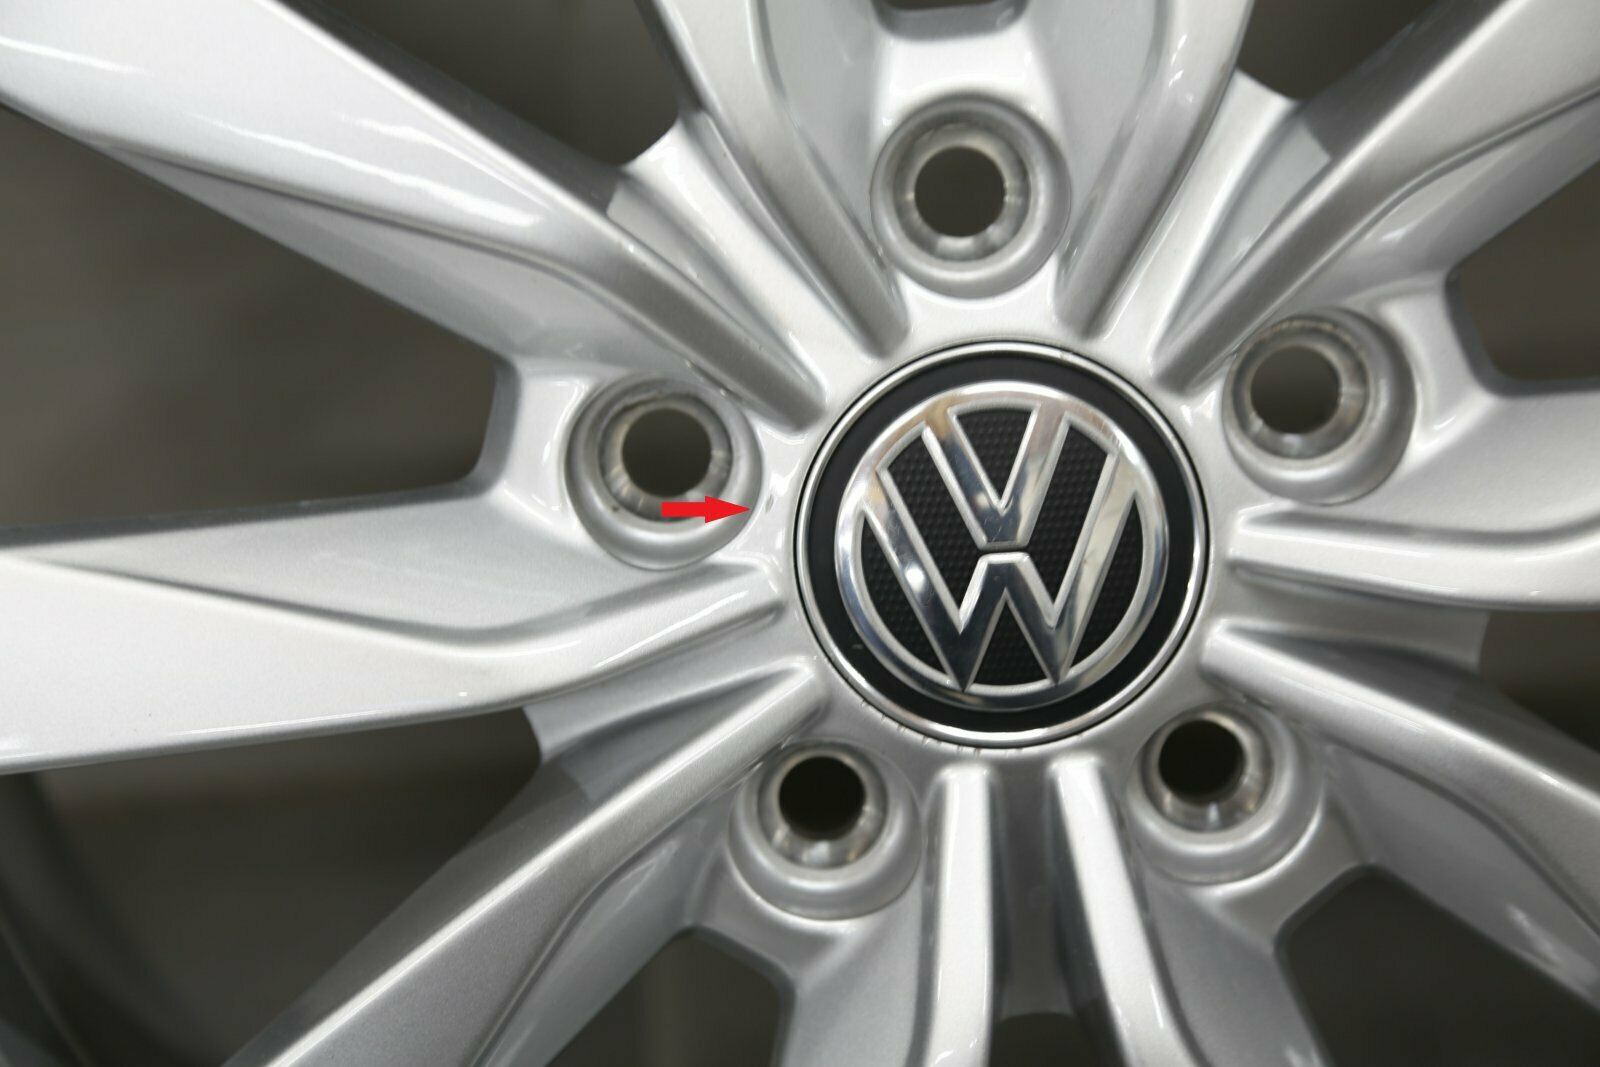 Llantas de 17 pulgadas VW Golf 7 6 VII VI Dijon neumáticos invierno ruedas